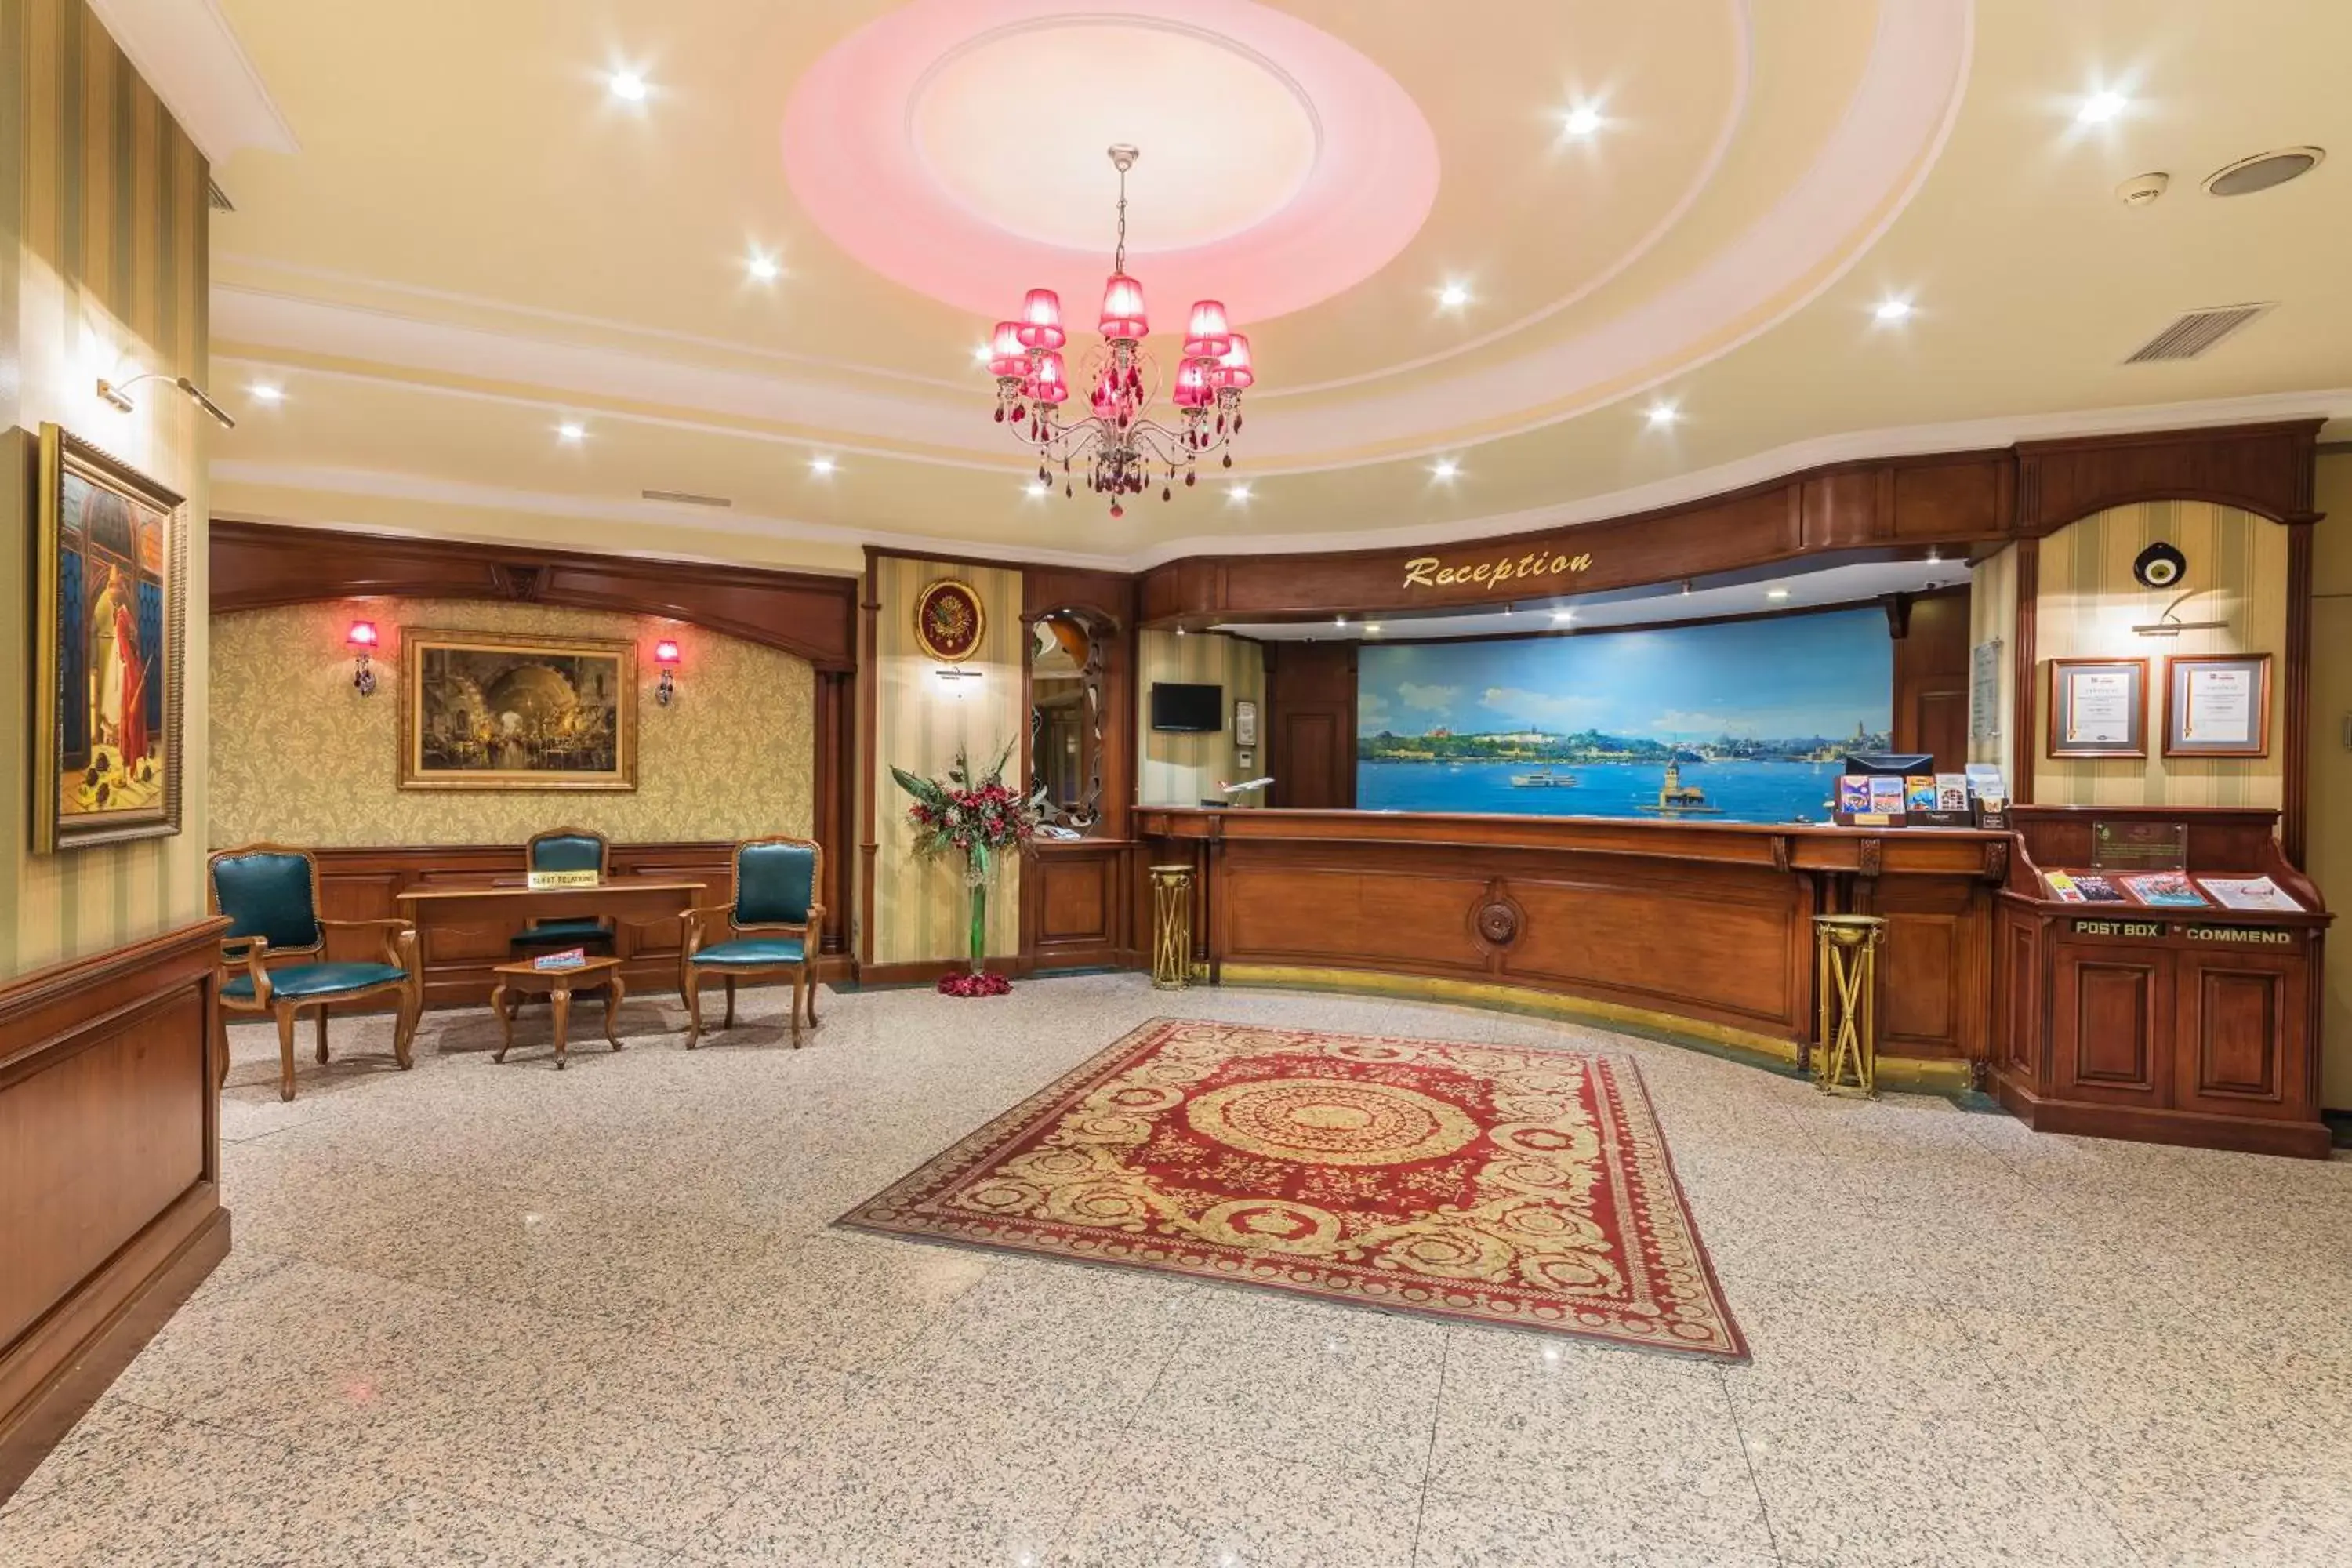 Night, Lobby/Reception in Grand Yavuz Hotel Sultanahmet